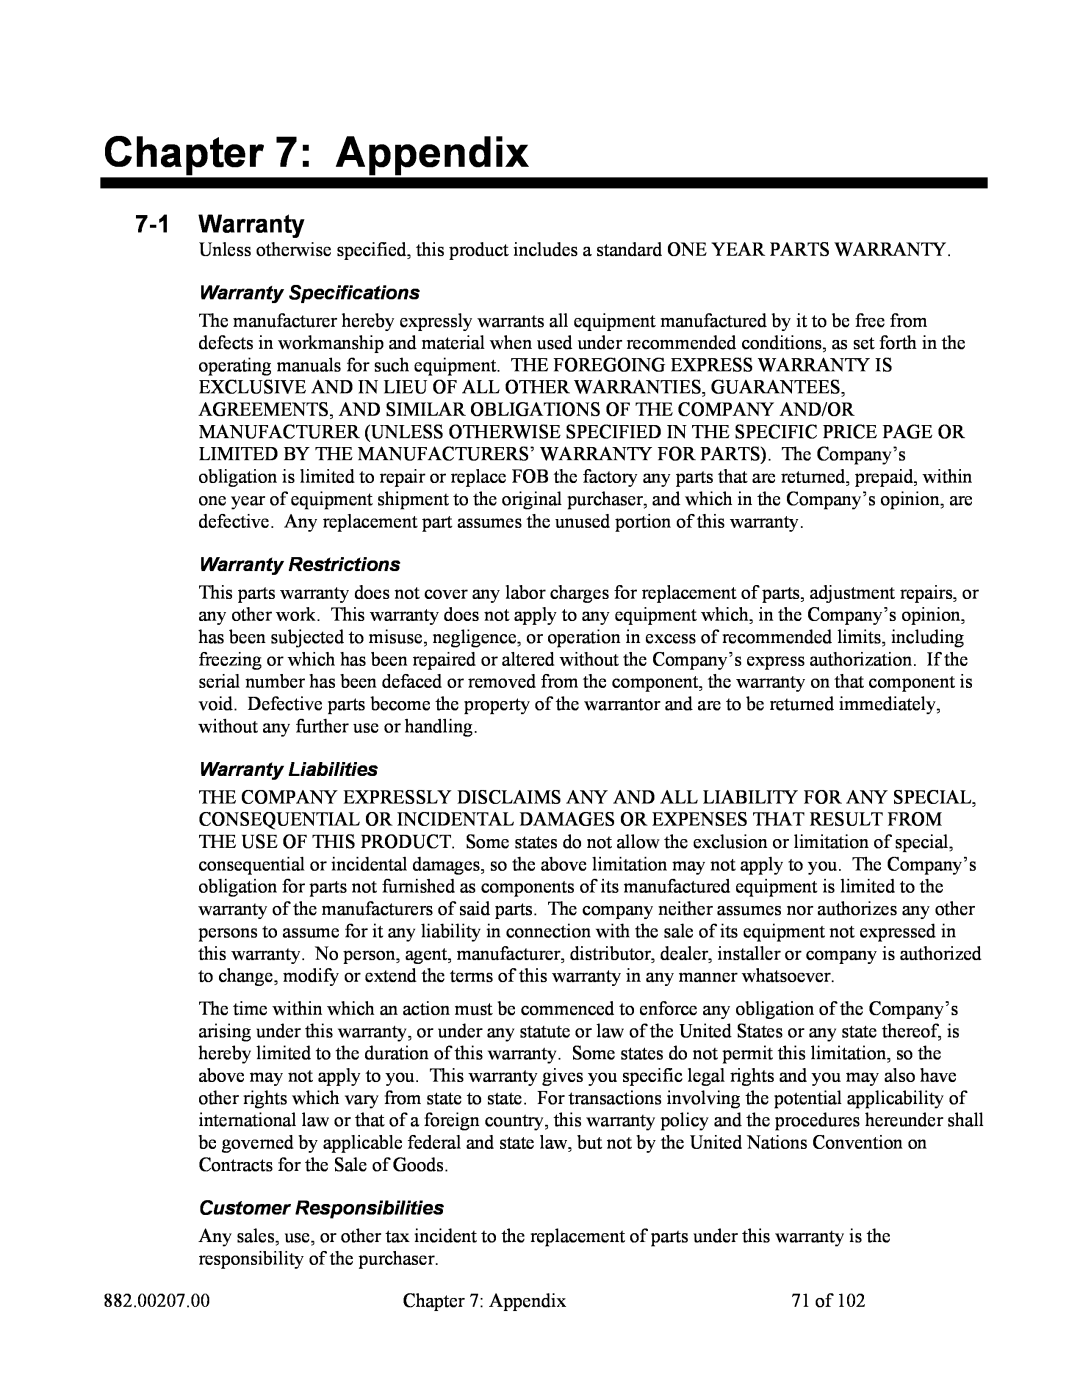 Mitsubishi Electronics 882.00207.00 specifications Appendix, 7-1Warranty, Warranty Specifications, Warranty Restrictions 